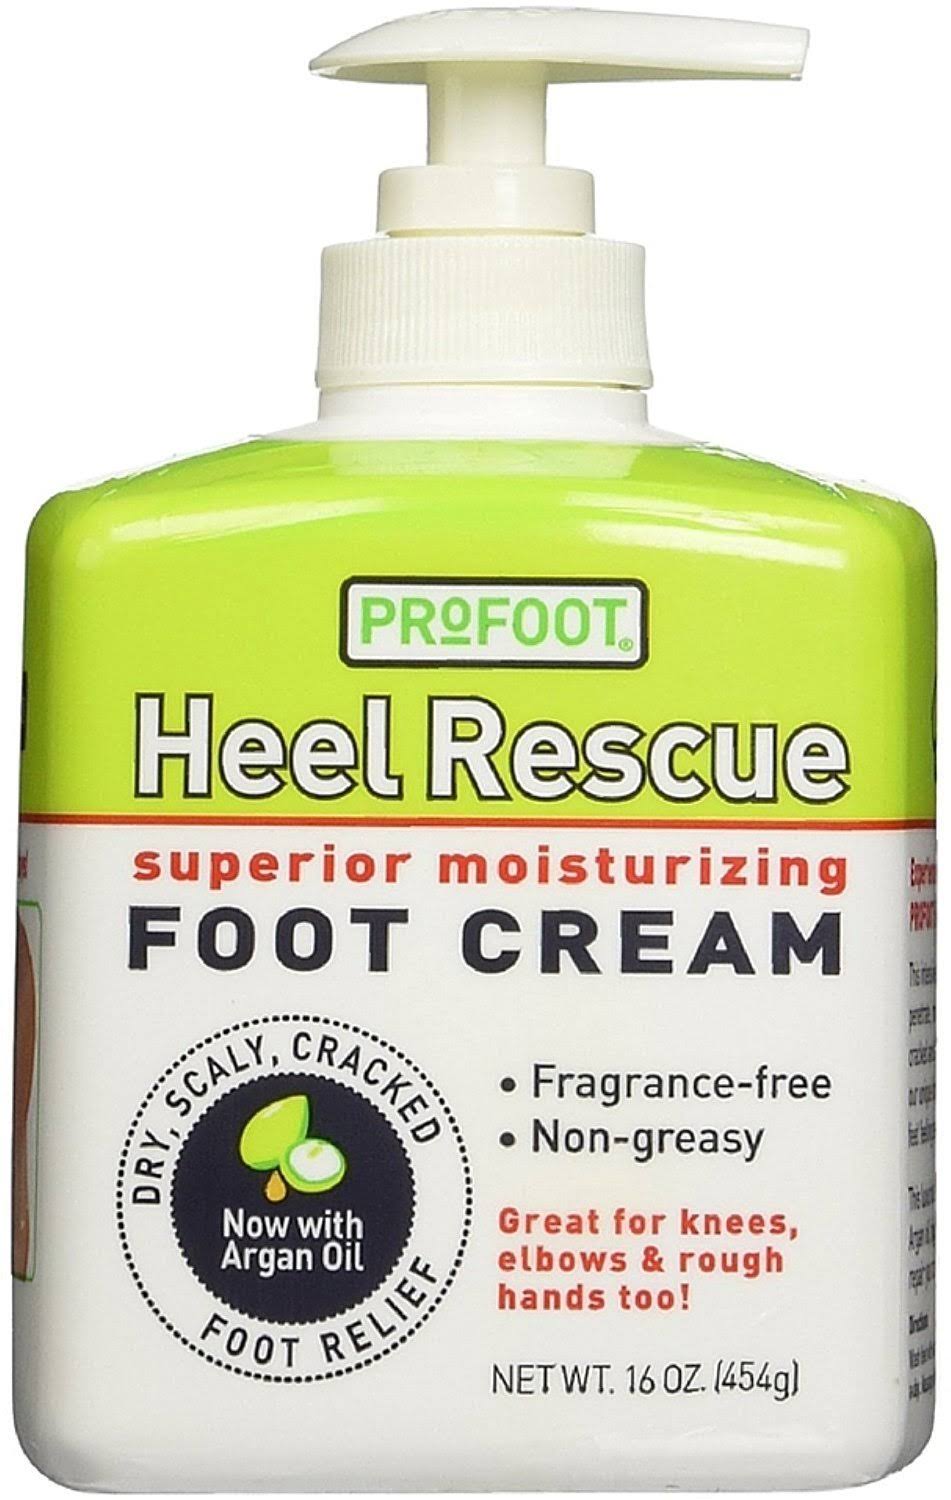 Profoot Heel Rescue Foot Cream - 16oz